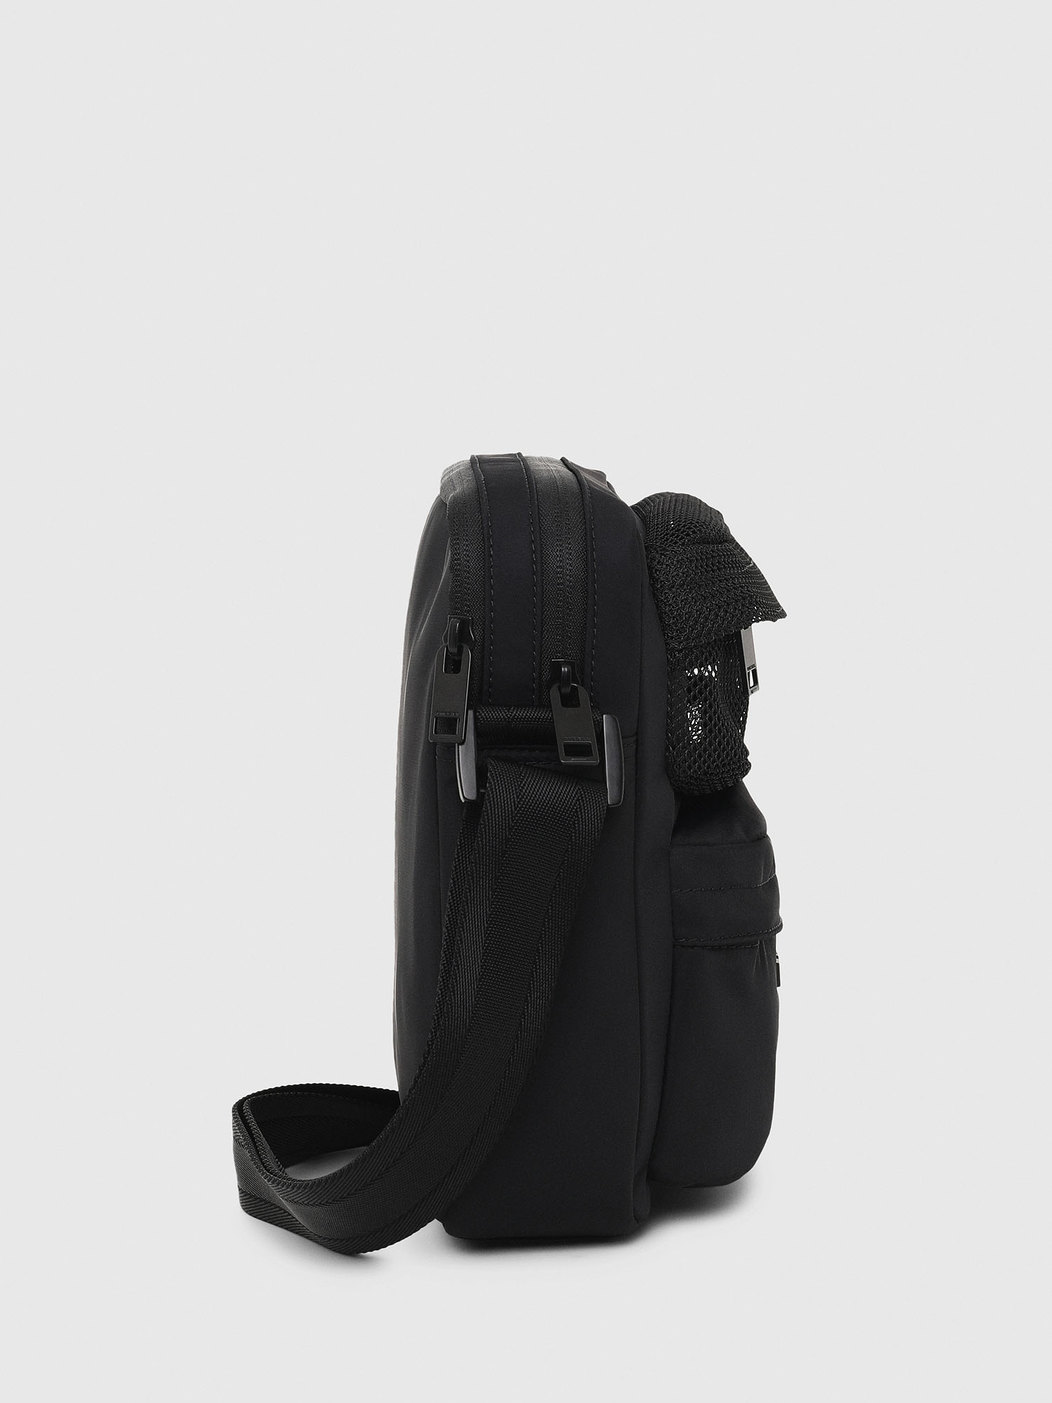 Cross-Body Bag With Mesh Pocket